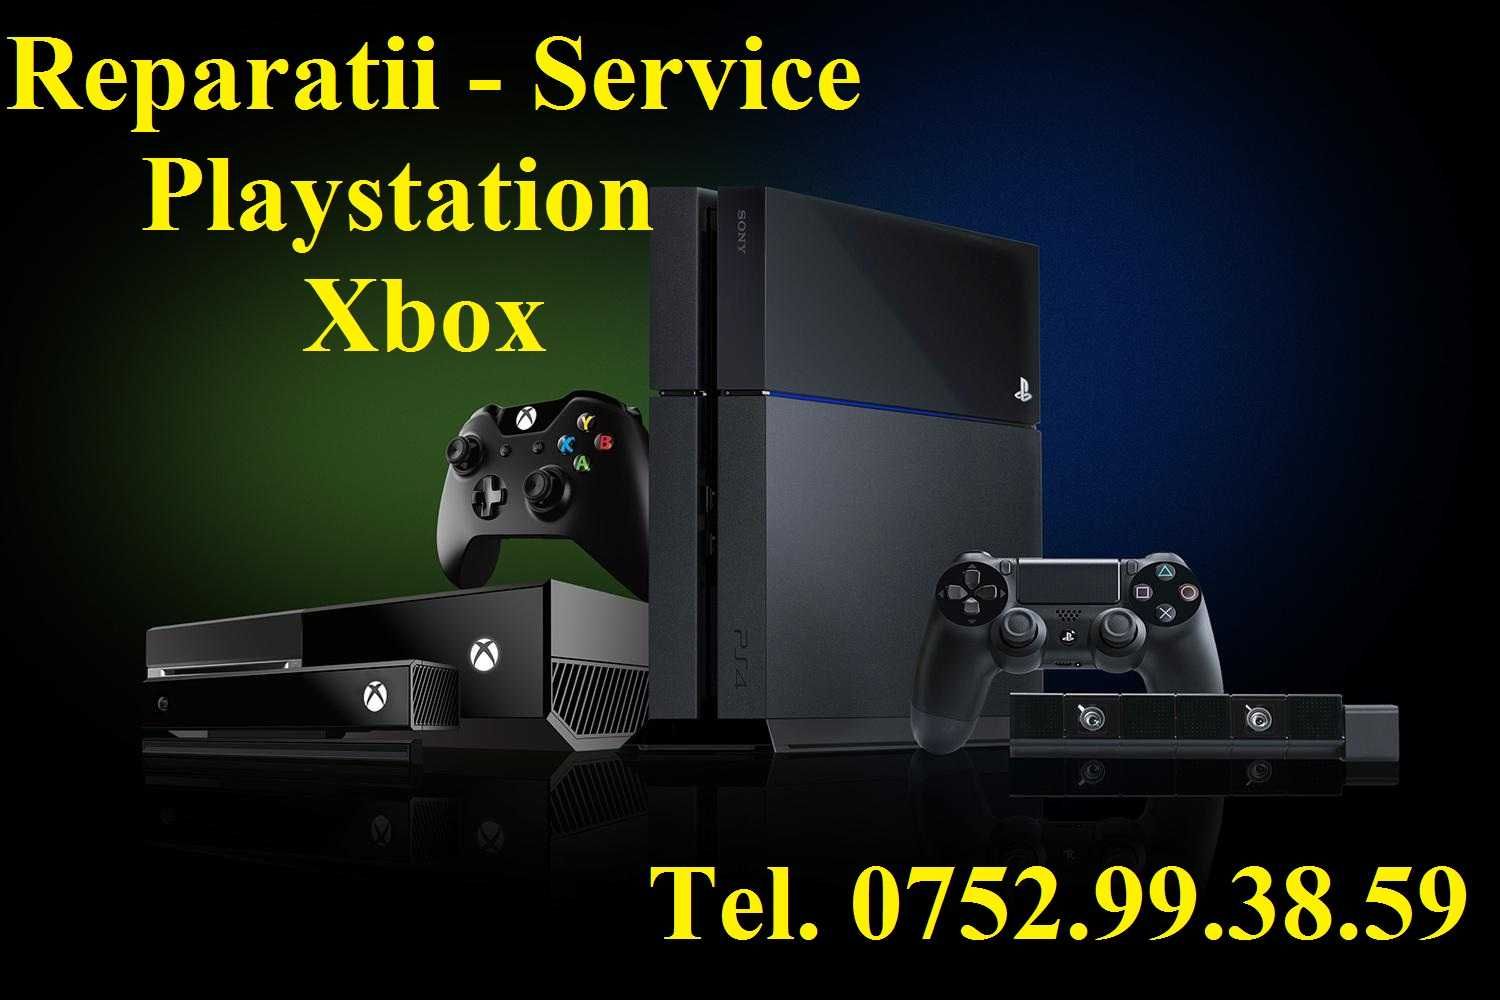 Reparatii-Service PS4 PS5 Xbox, laptop, instalare windows